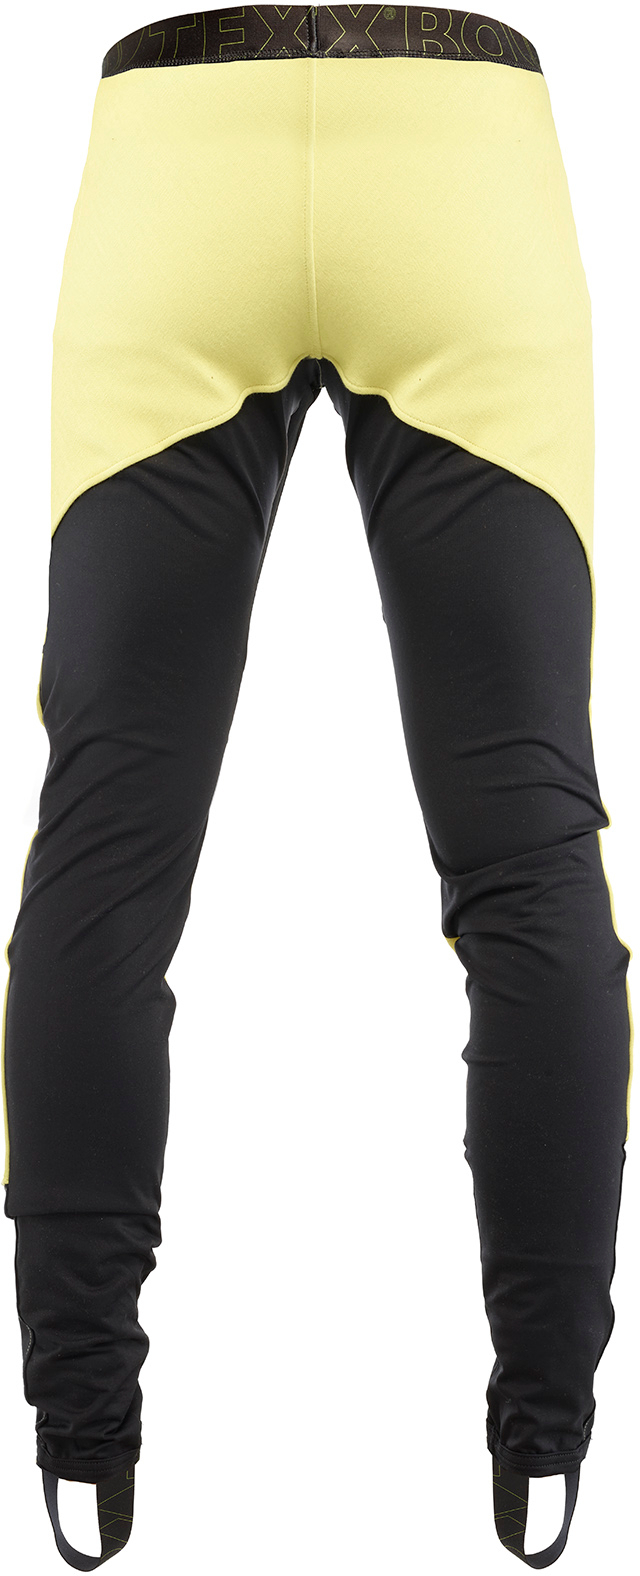 BOWTEX Essential CE Level AA Yellow - Technical underwear